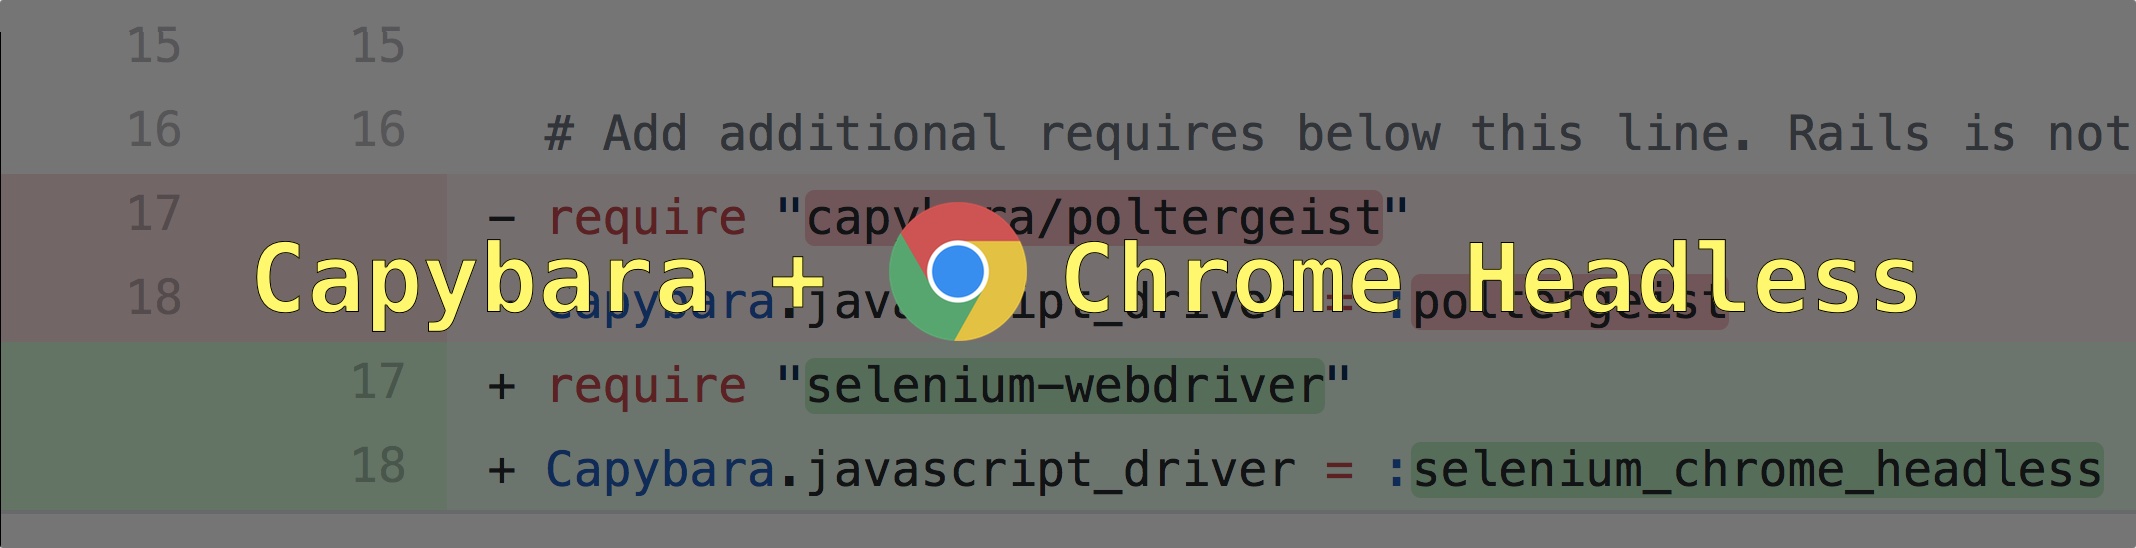 (image)Rails E2Eテストで poltergeist から Headless Chrome へと乗り換える